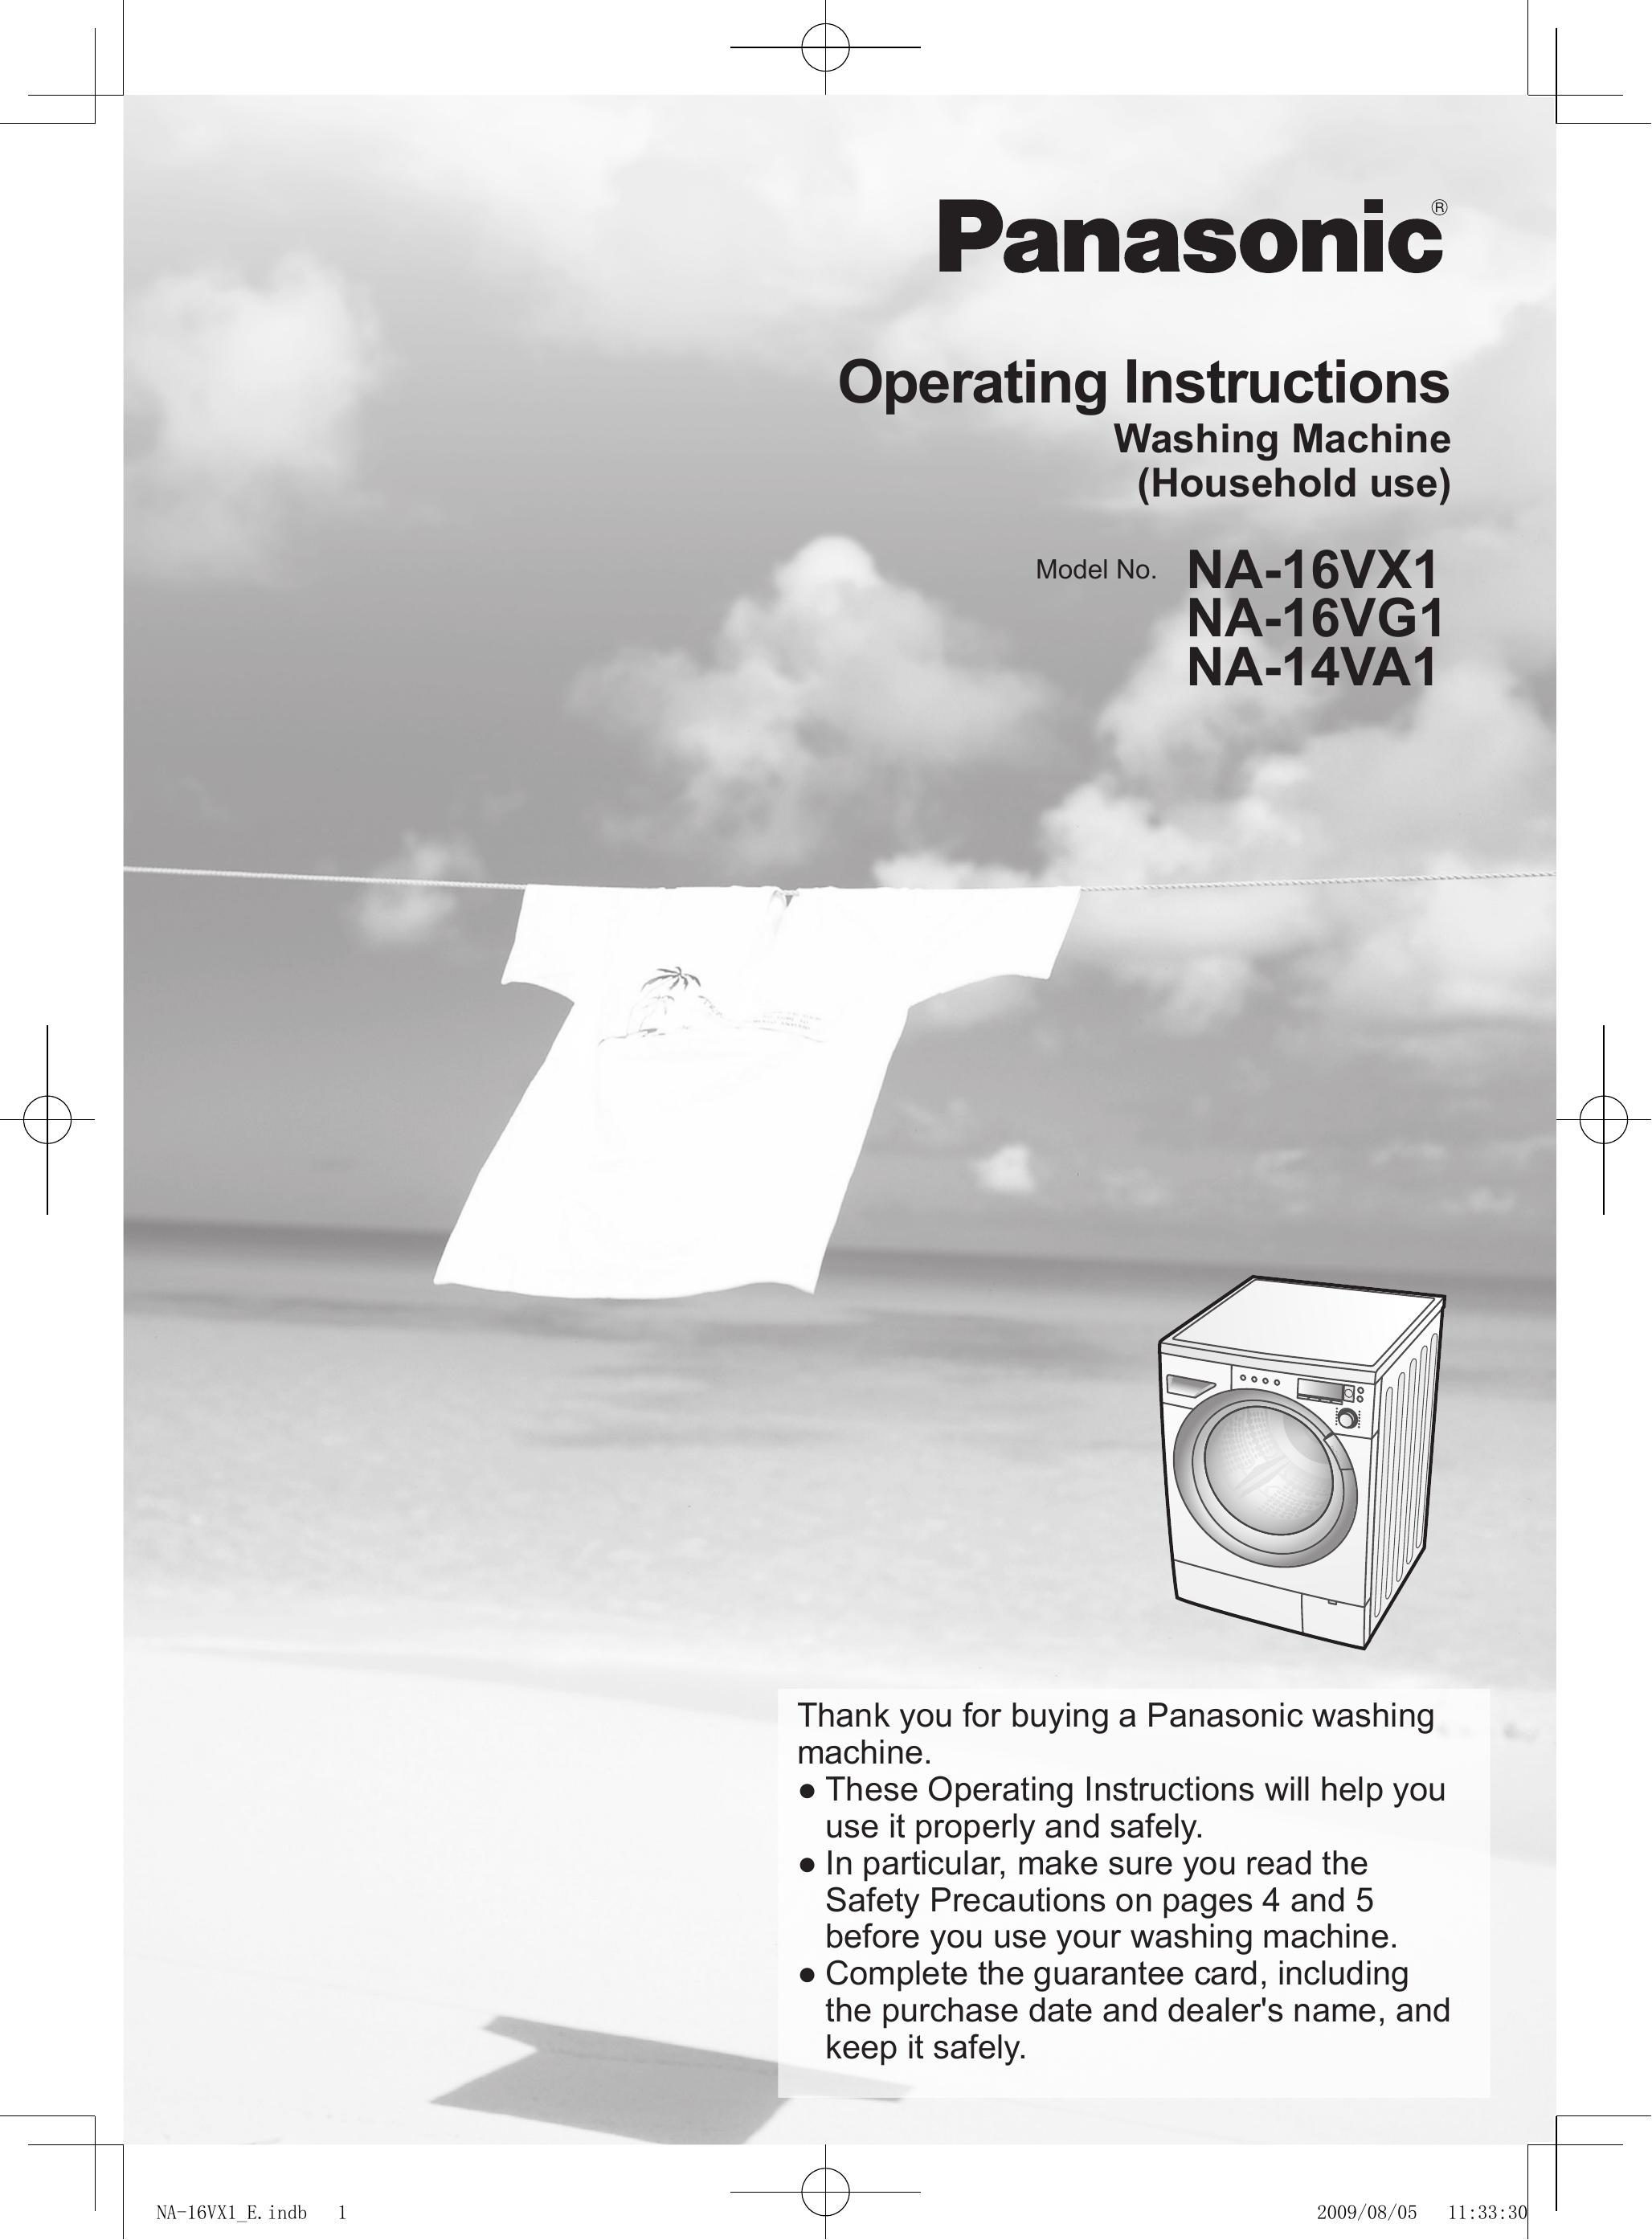 Panasonic NA-16VG1 Washer/Dryer User Manual